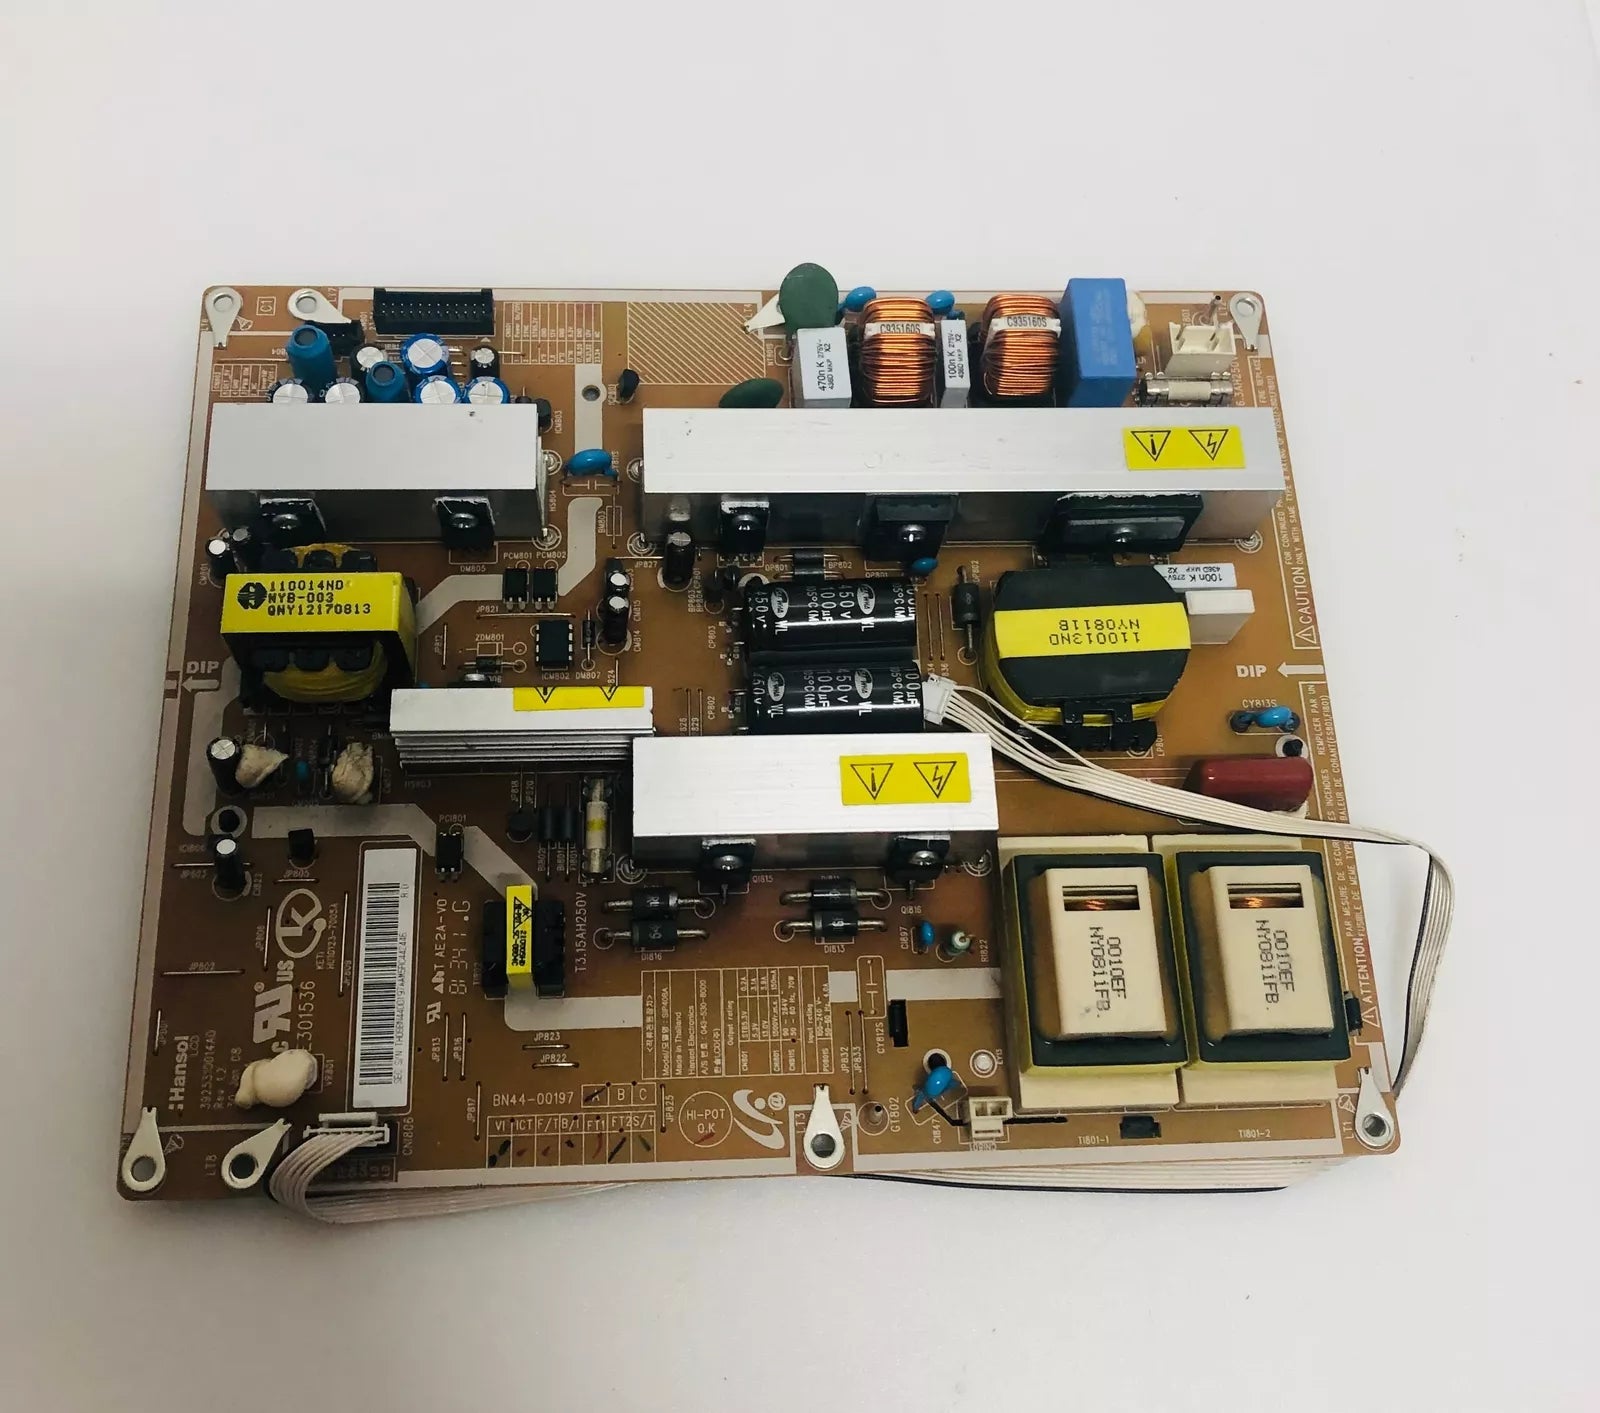 Samsung BN44-00197A power supply